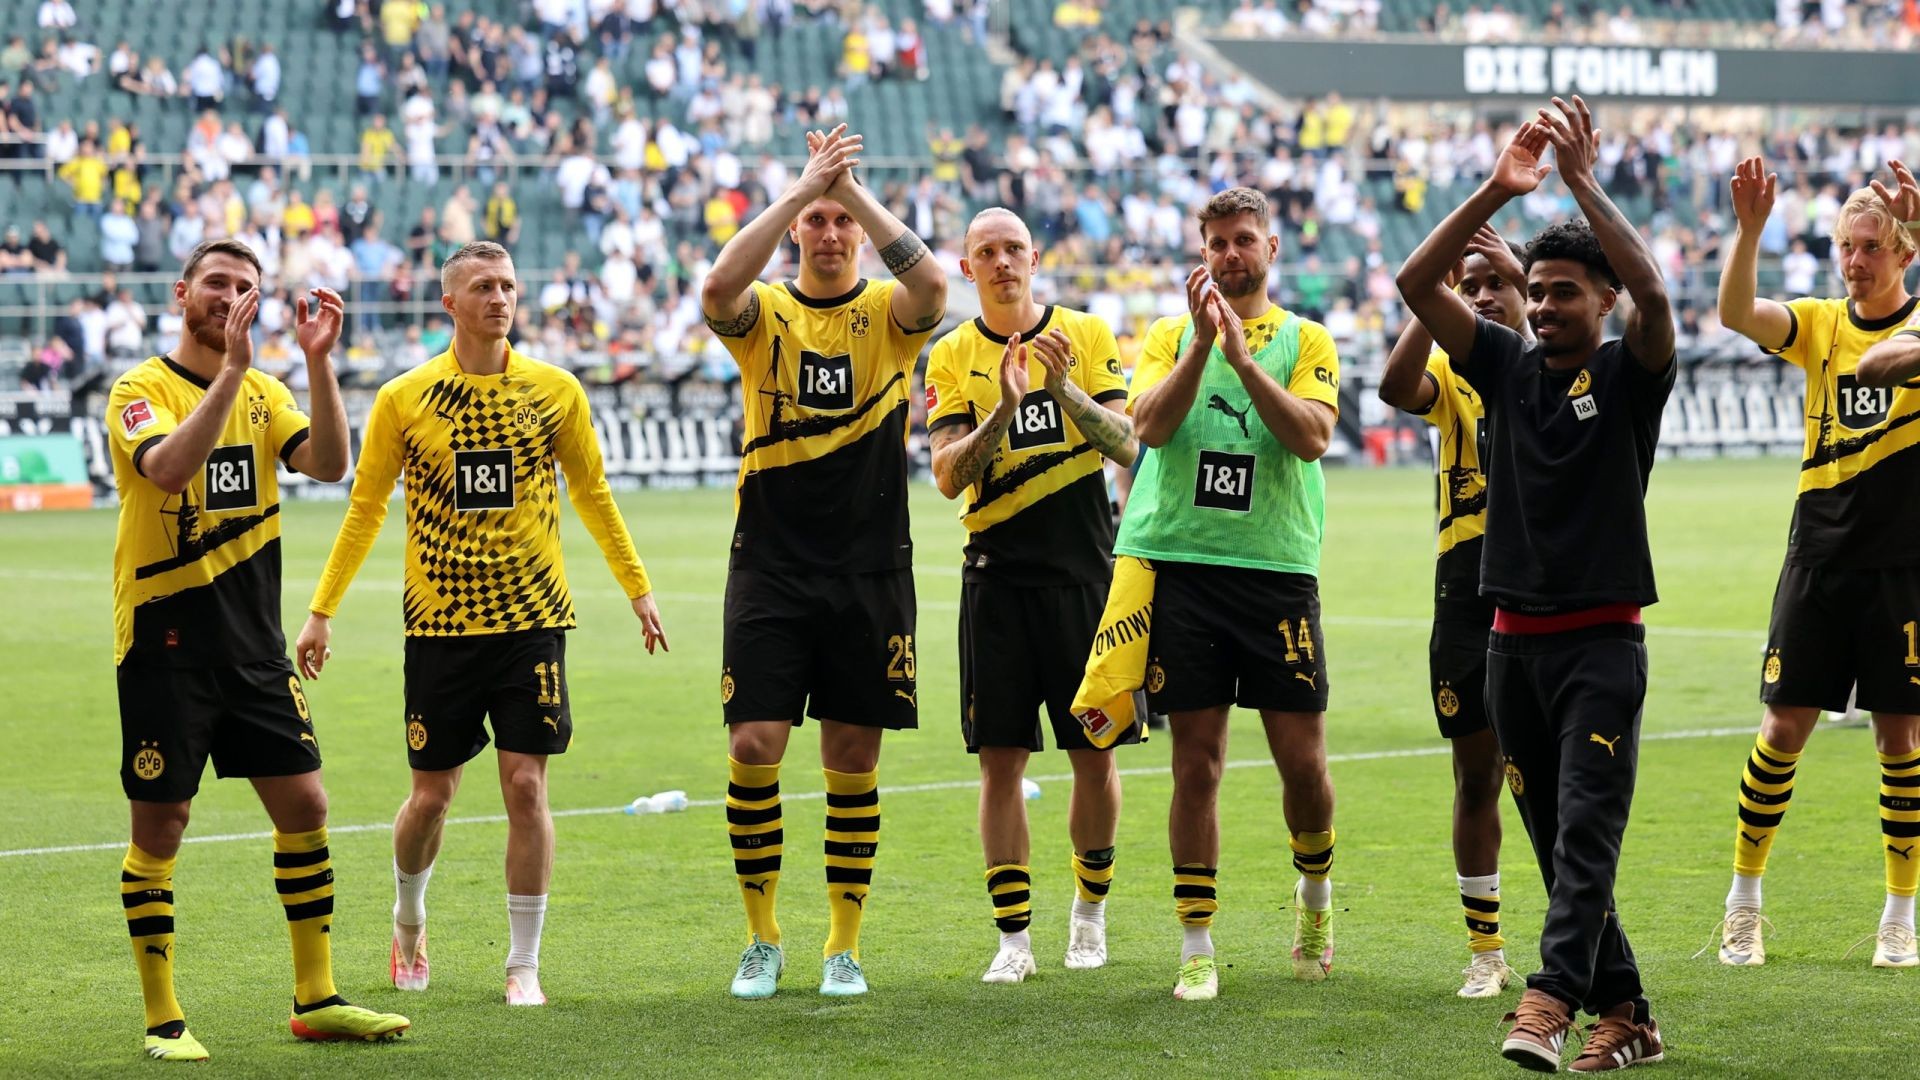 Borussia Monchengladbach vs Borussia Dortmund full match replay and highlights